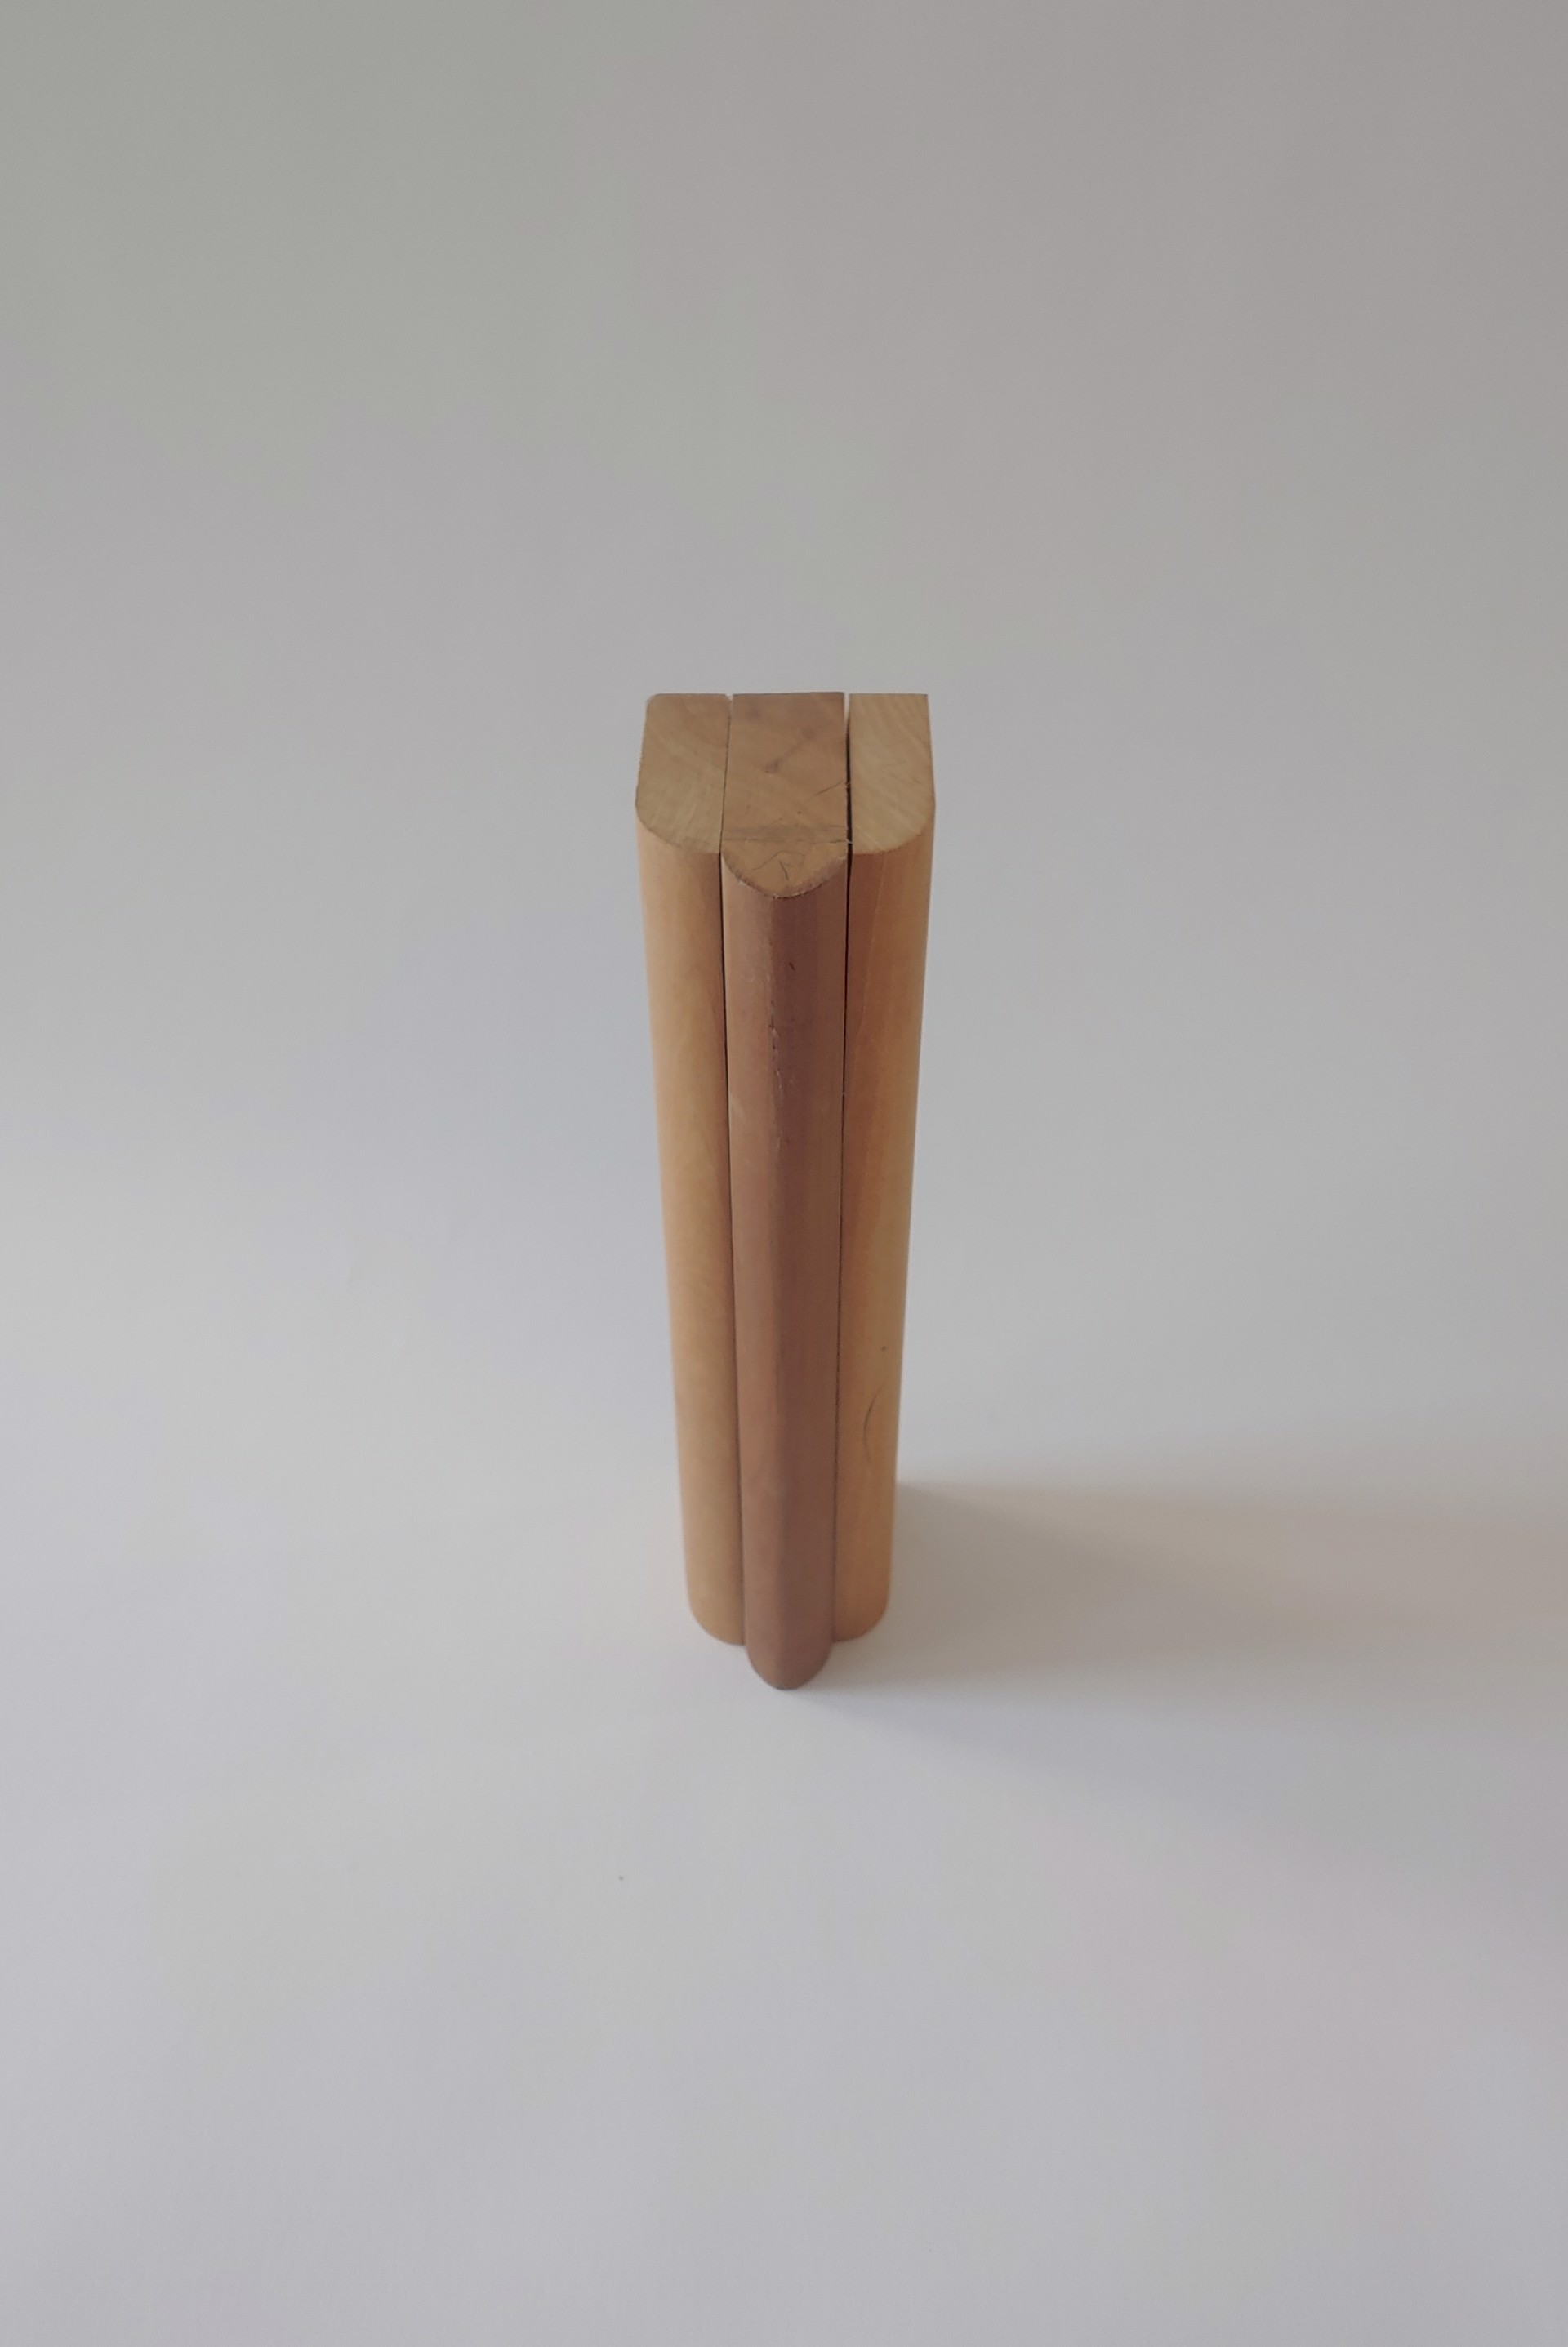 Model #4- Wood Sculpture by David Amdur